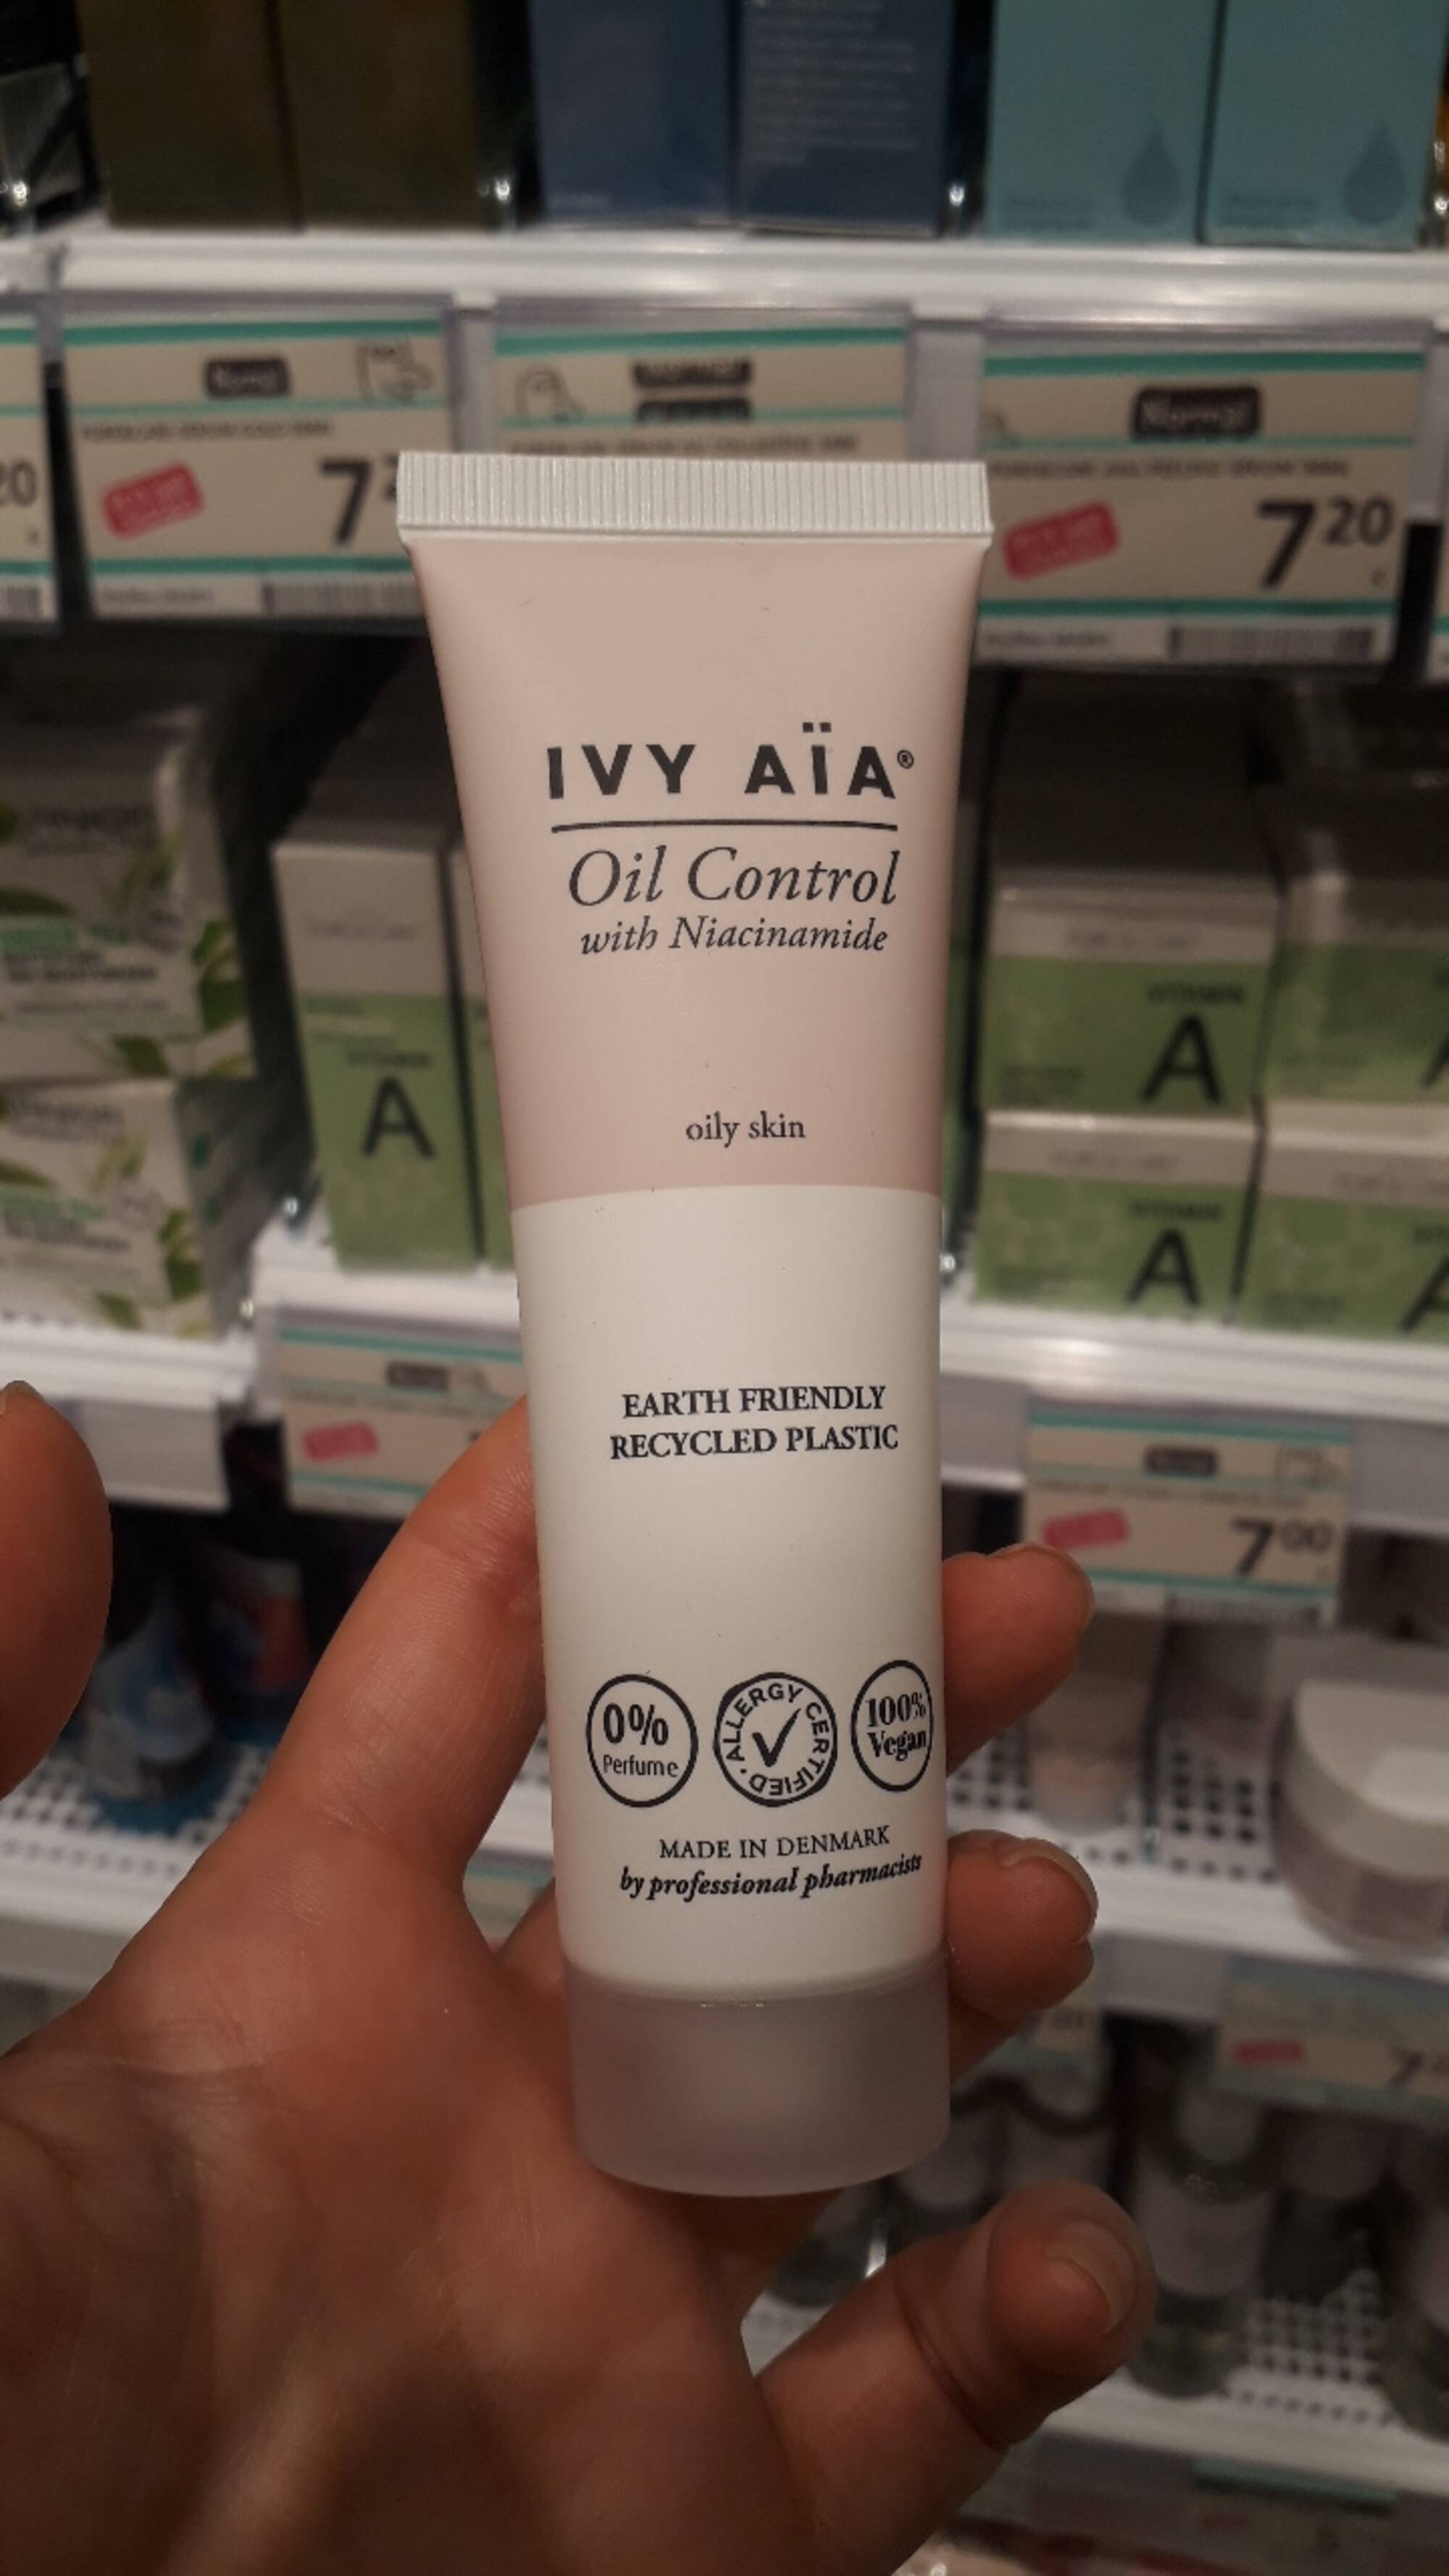 IVY AÏA - Oil control Olily skin